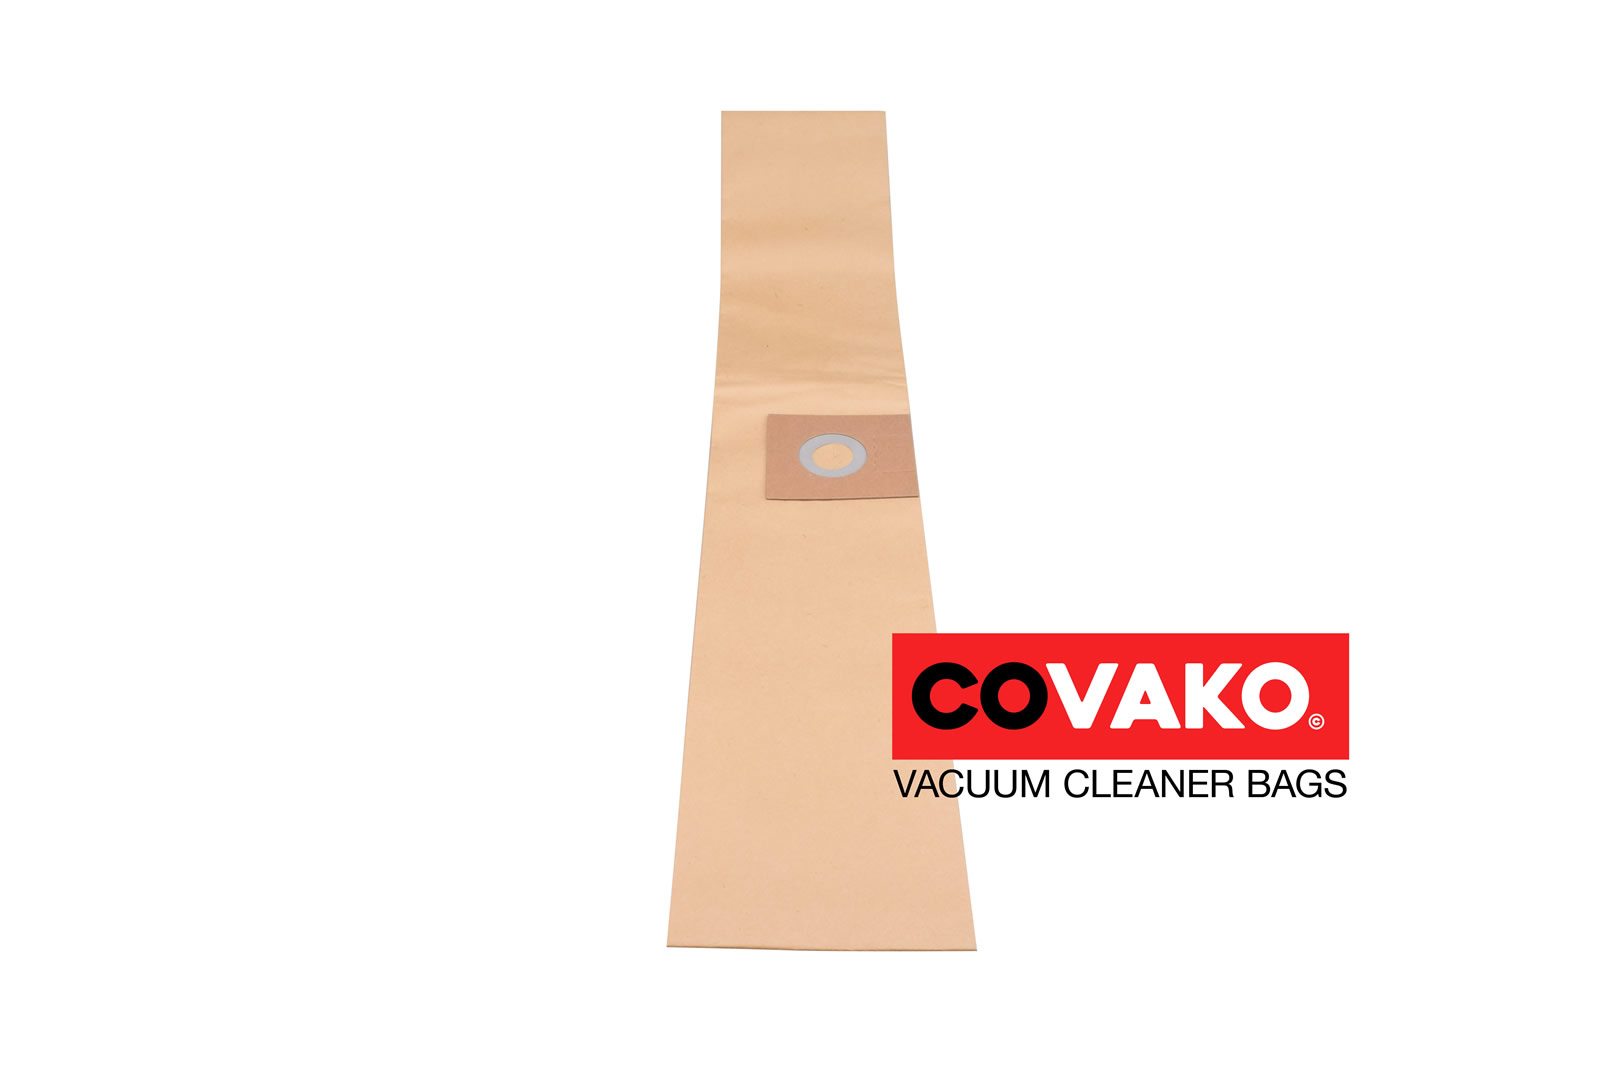 Wirbel Mikros K12 / Paper - Wirbel vacuum cleaner bags